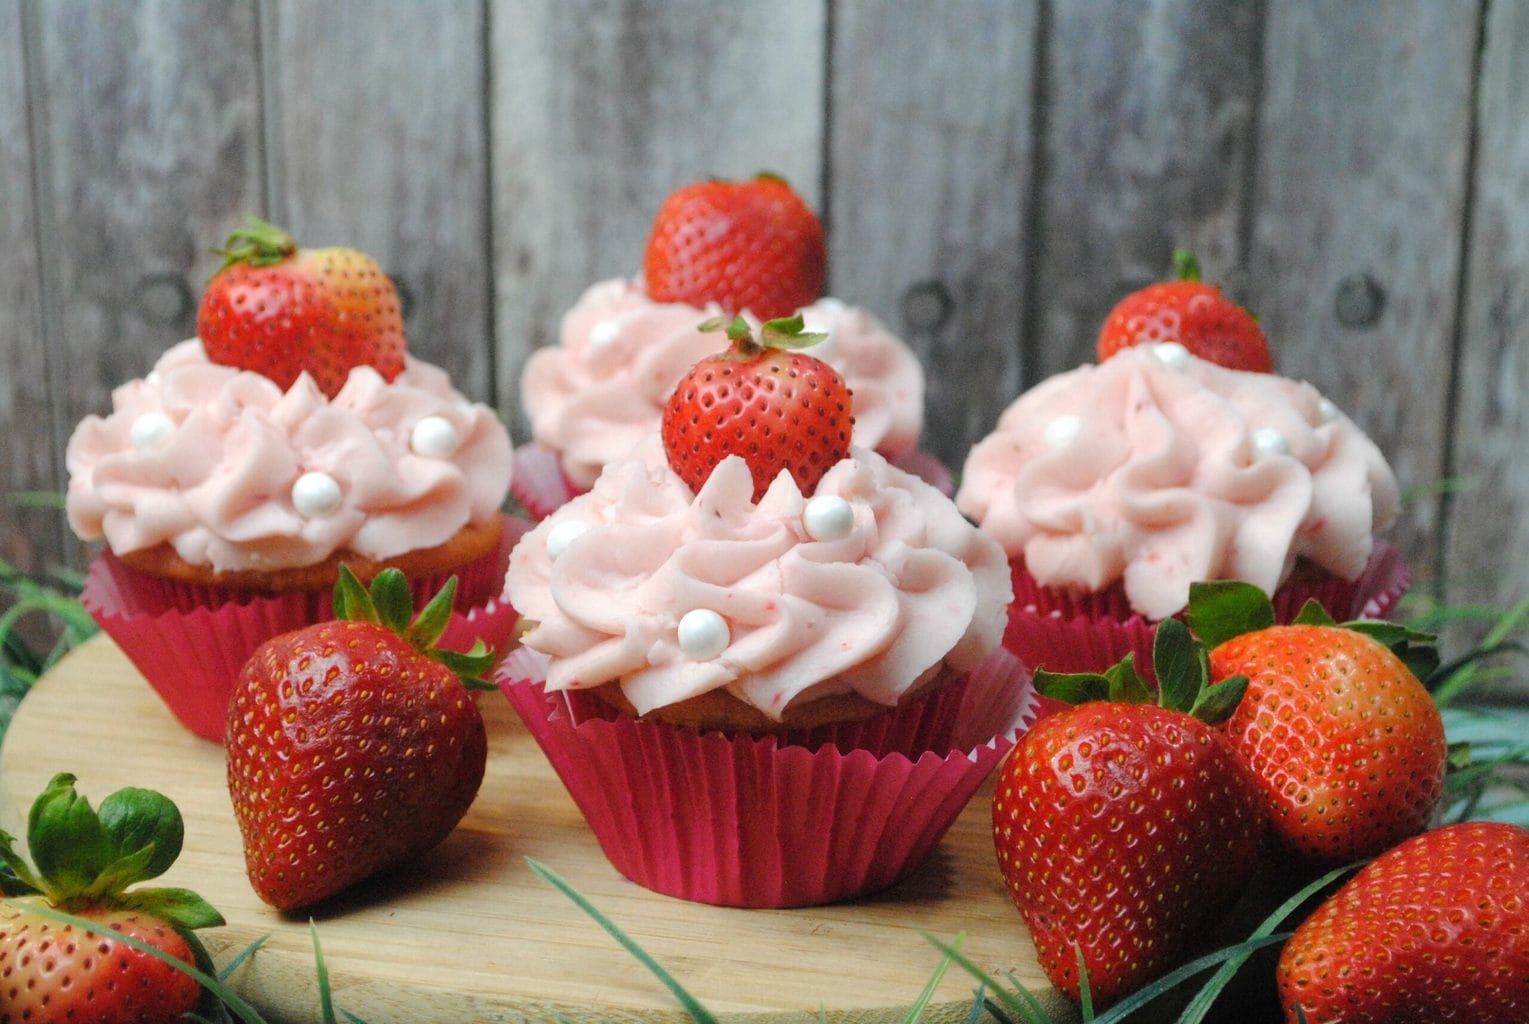 How to Make Amazing Strawberry Cream Cheese Cupcakes